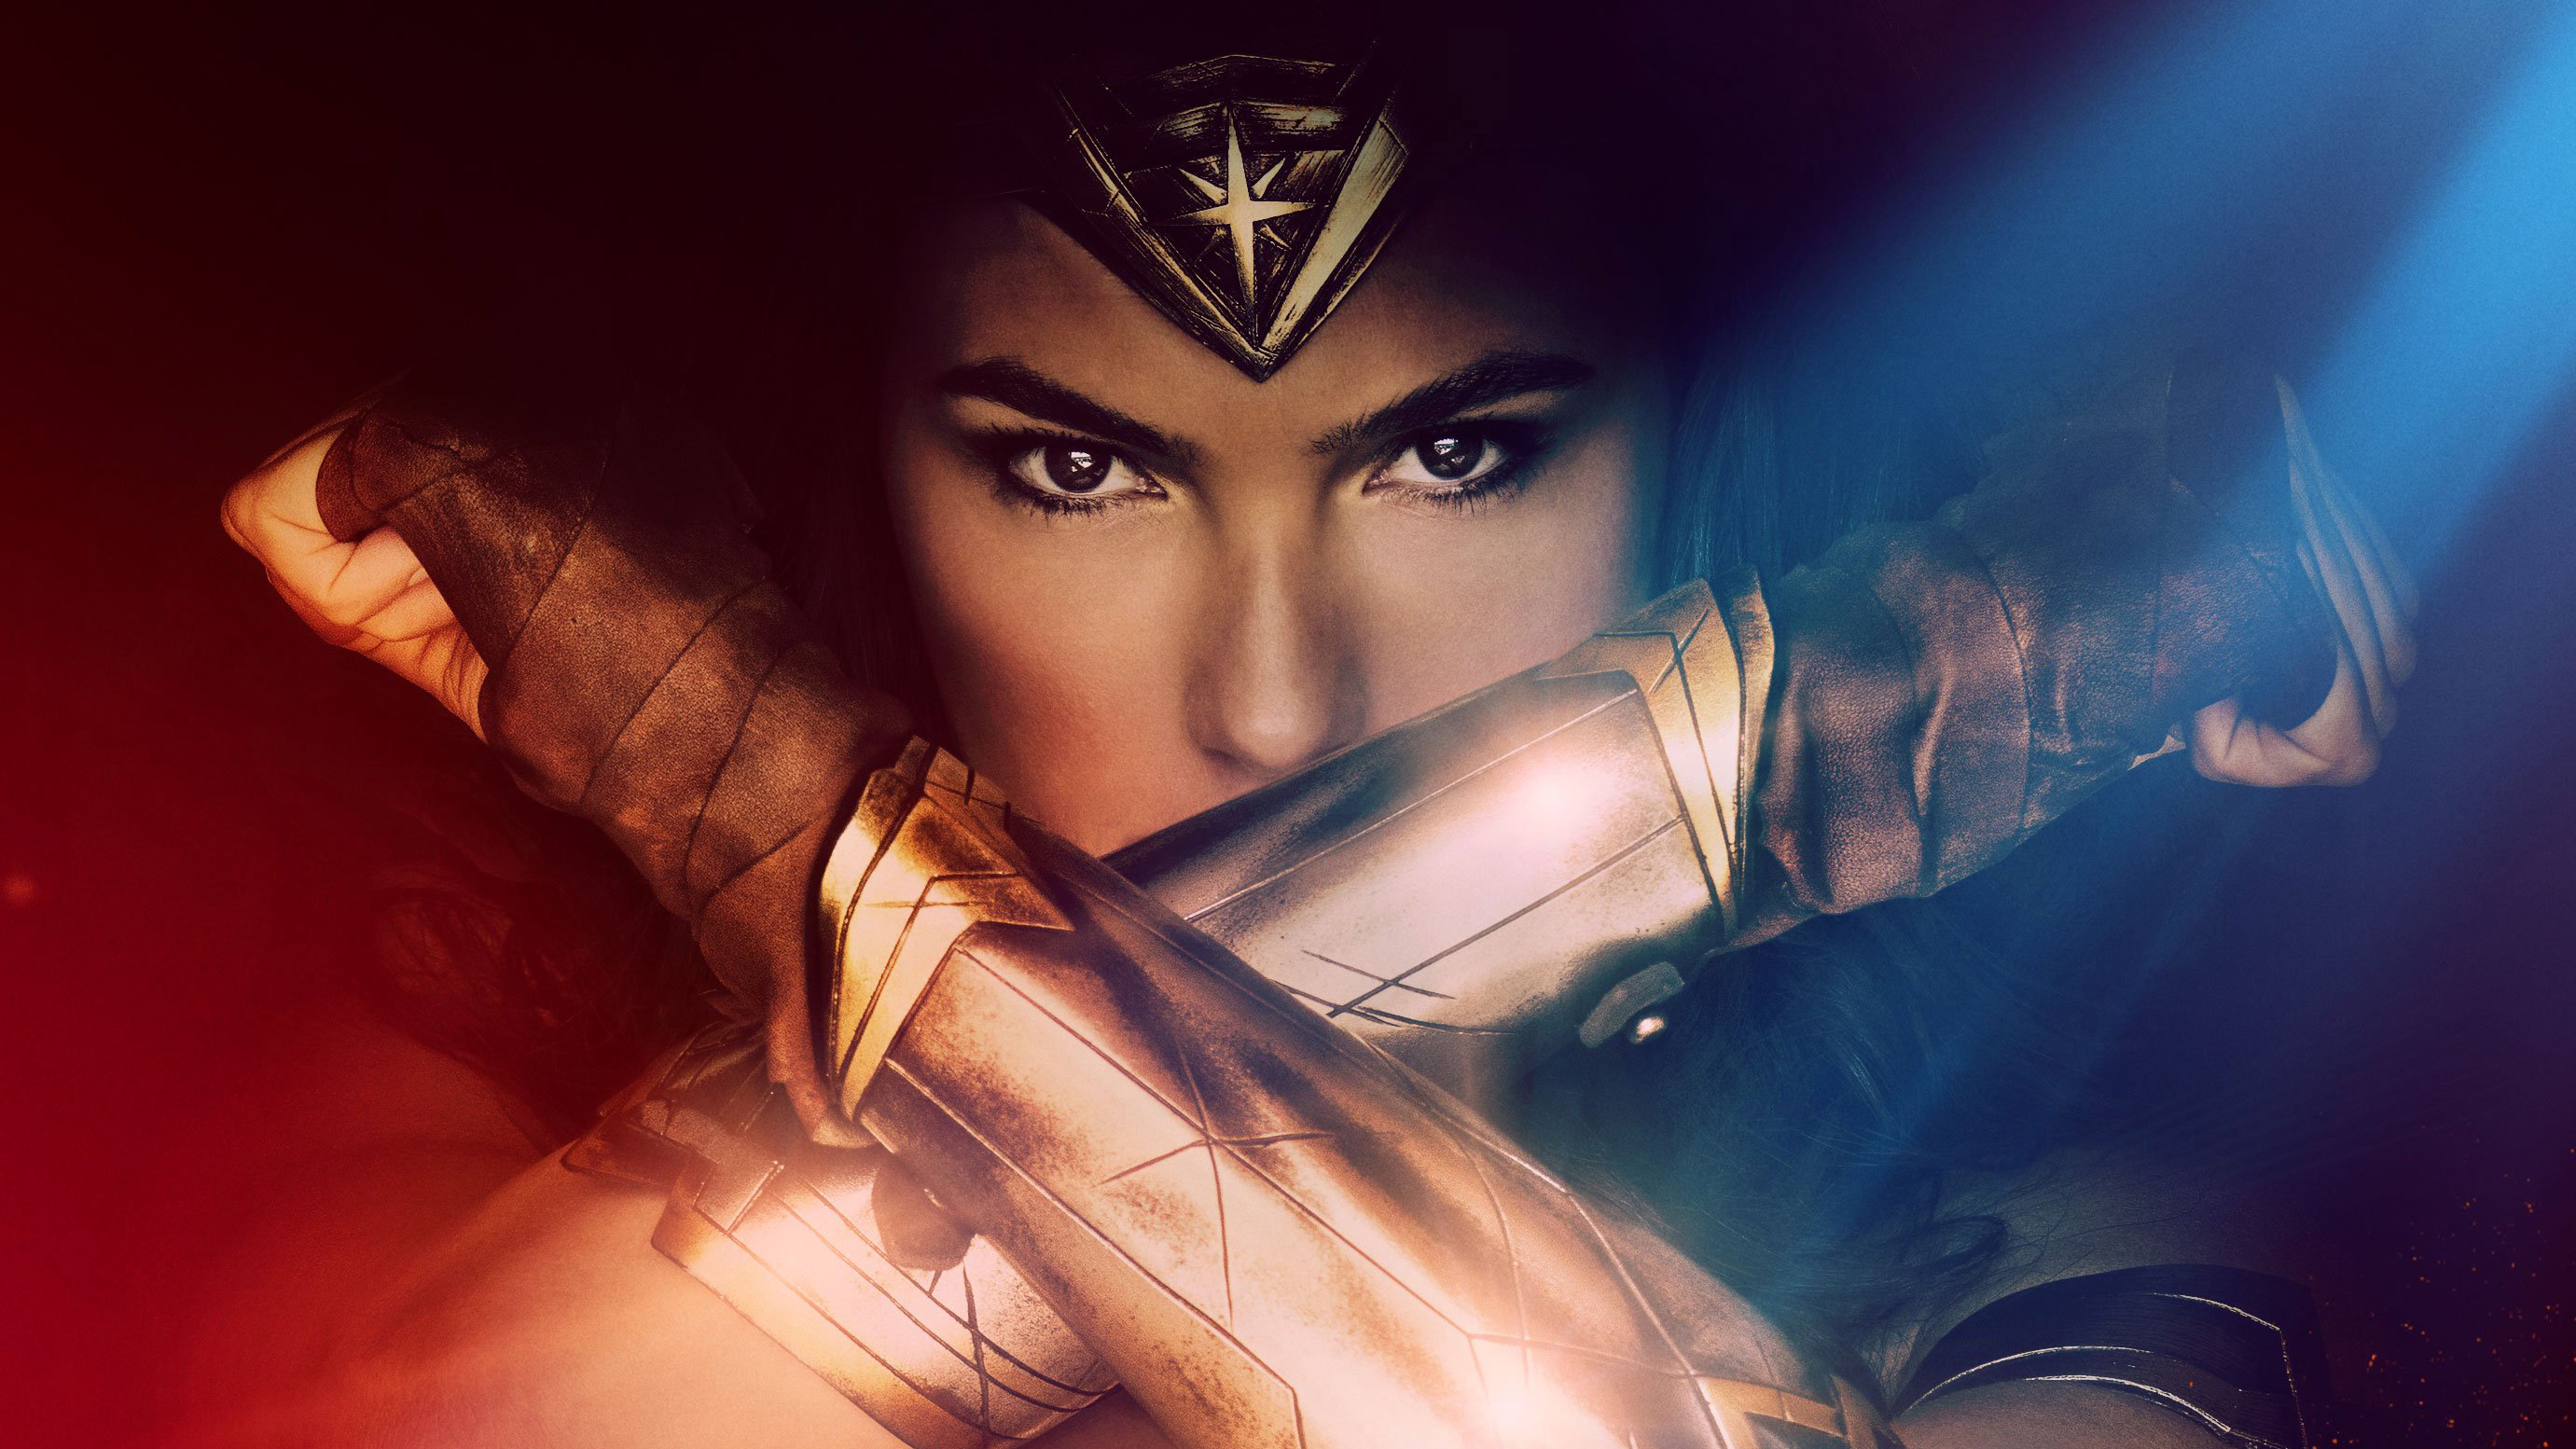 Movie Wonder Woman HD Wallpaper | Background Image